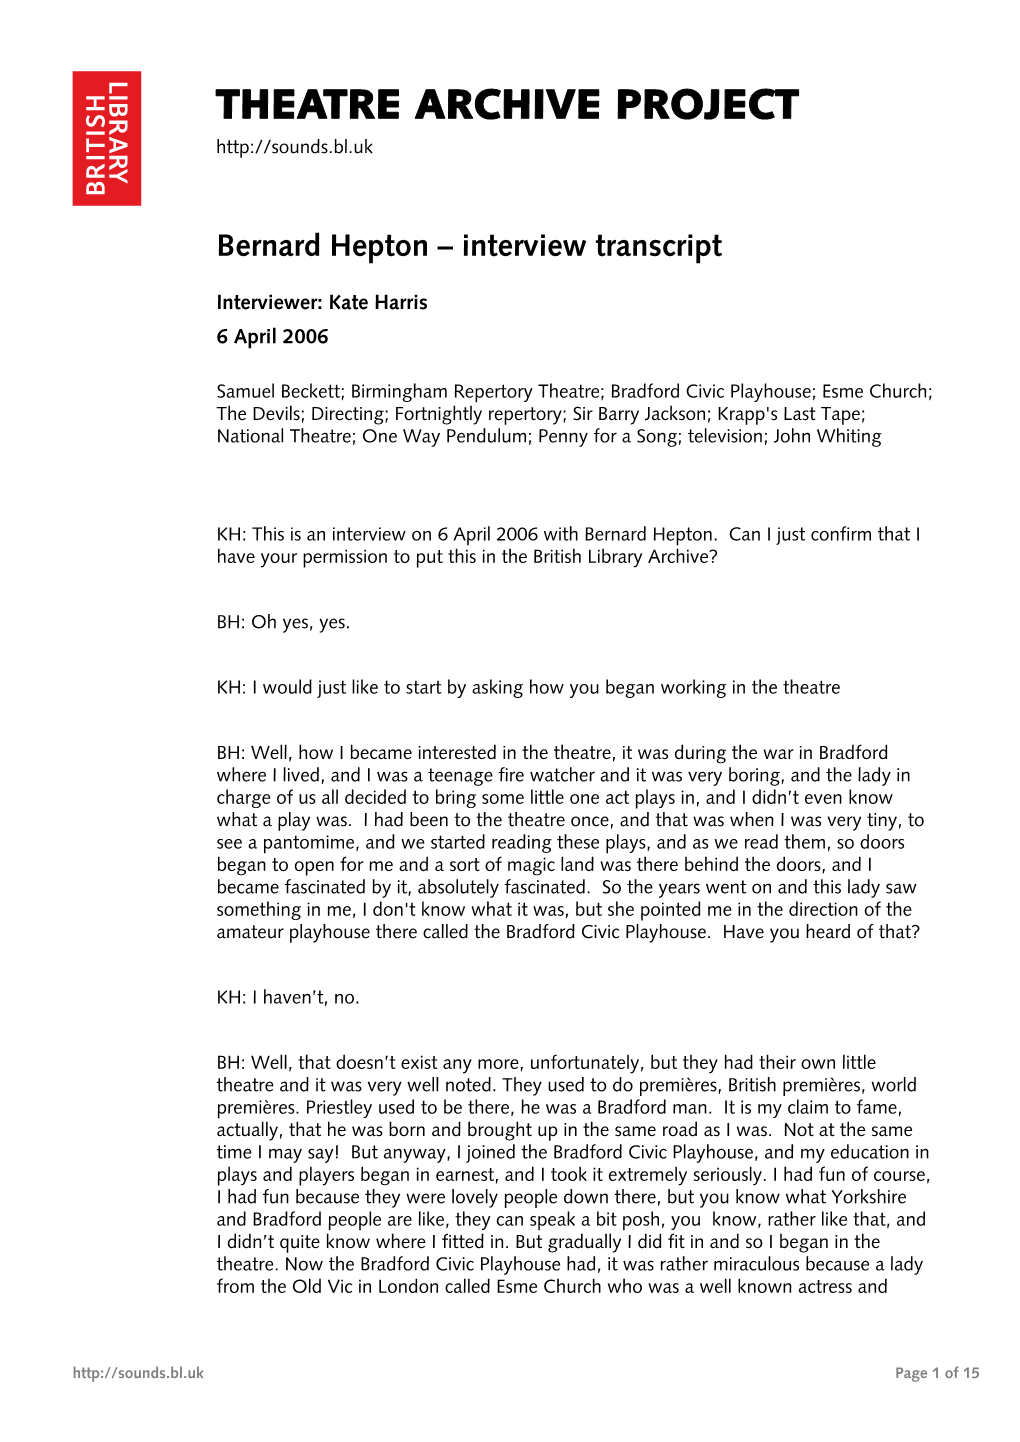 Interview with Bernard Hepton